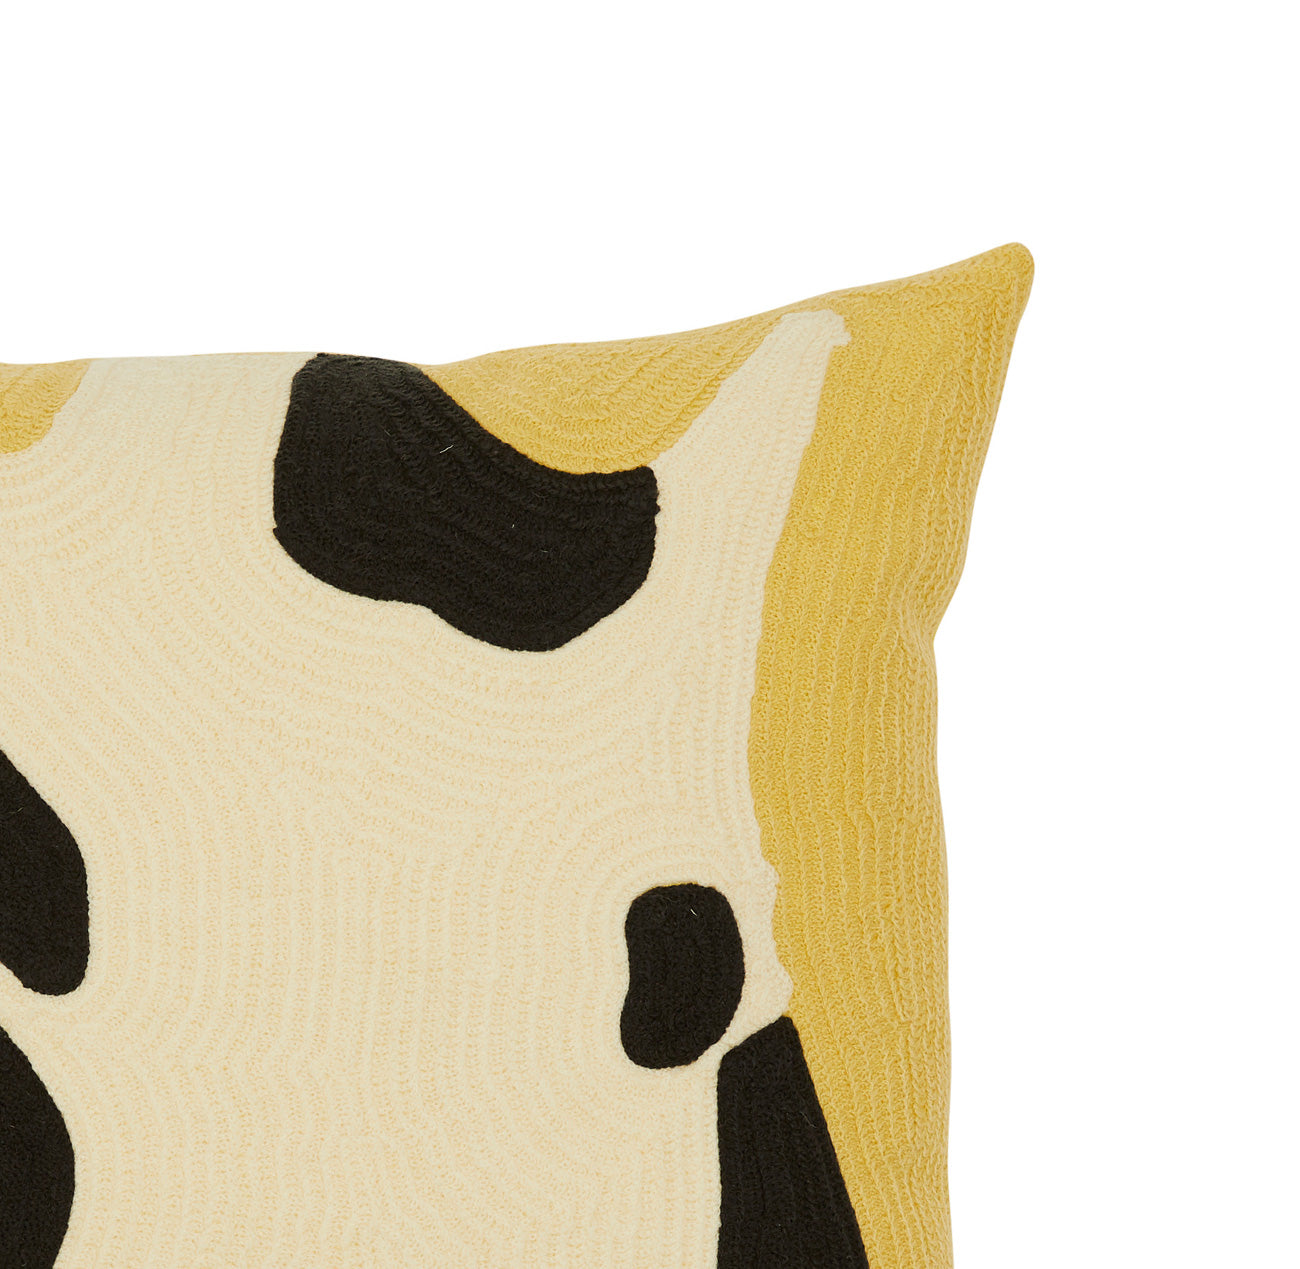 Cow Pillow